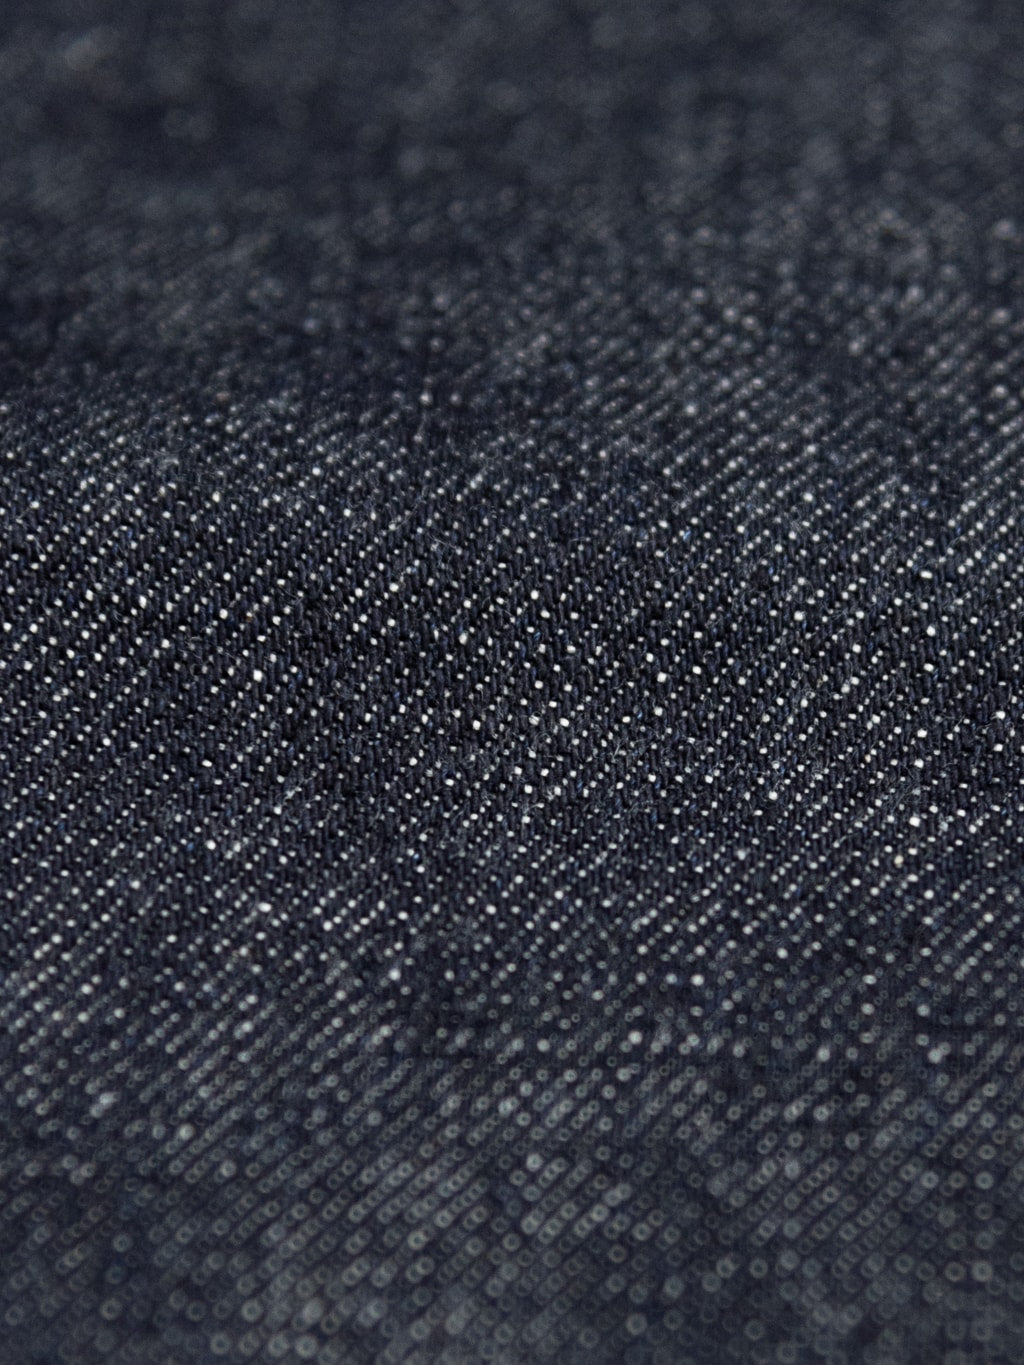 Stevenson Overall Big Sur 210 14oz Slim Tapered Jeans denim fabric